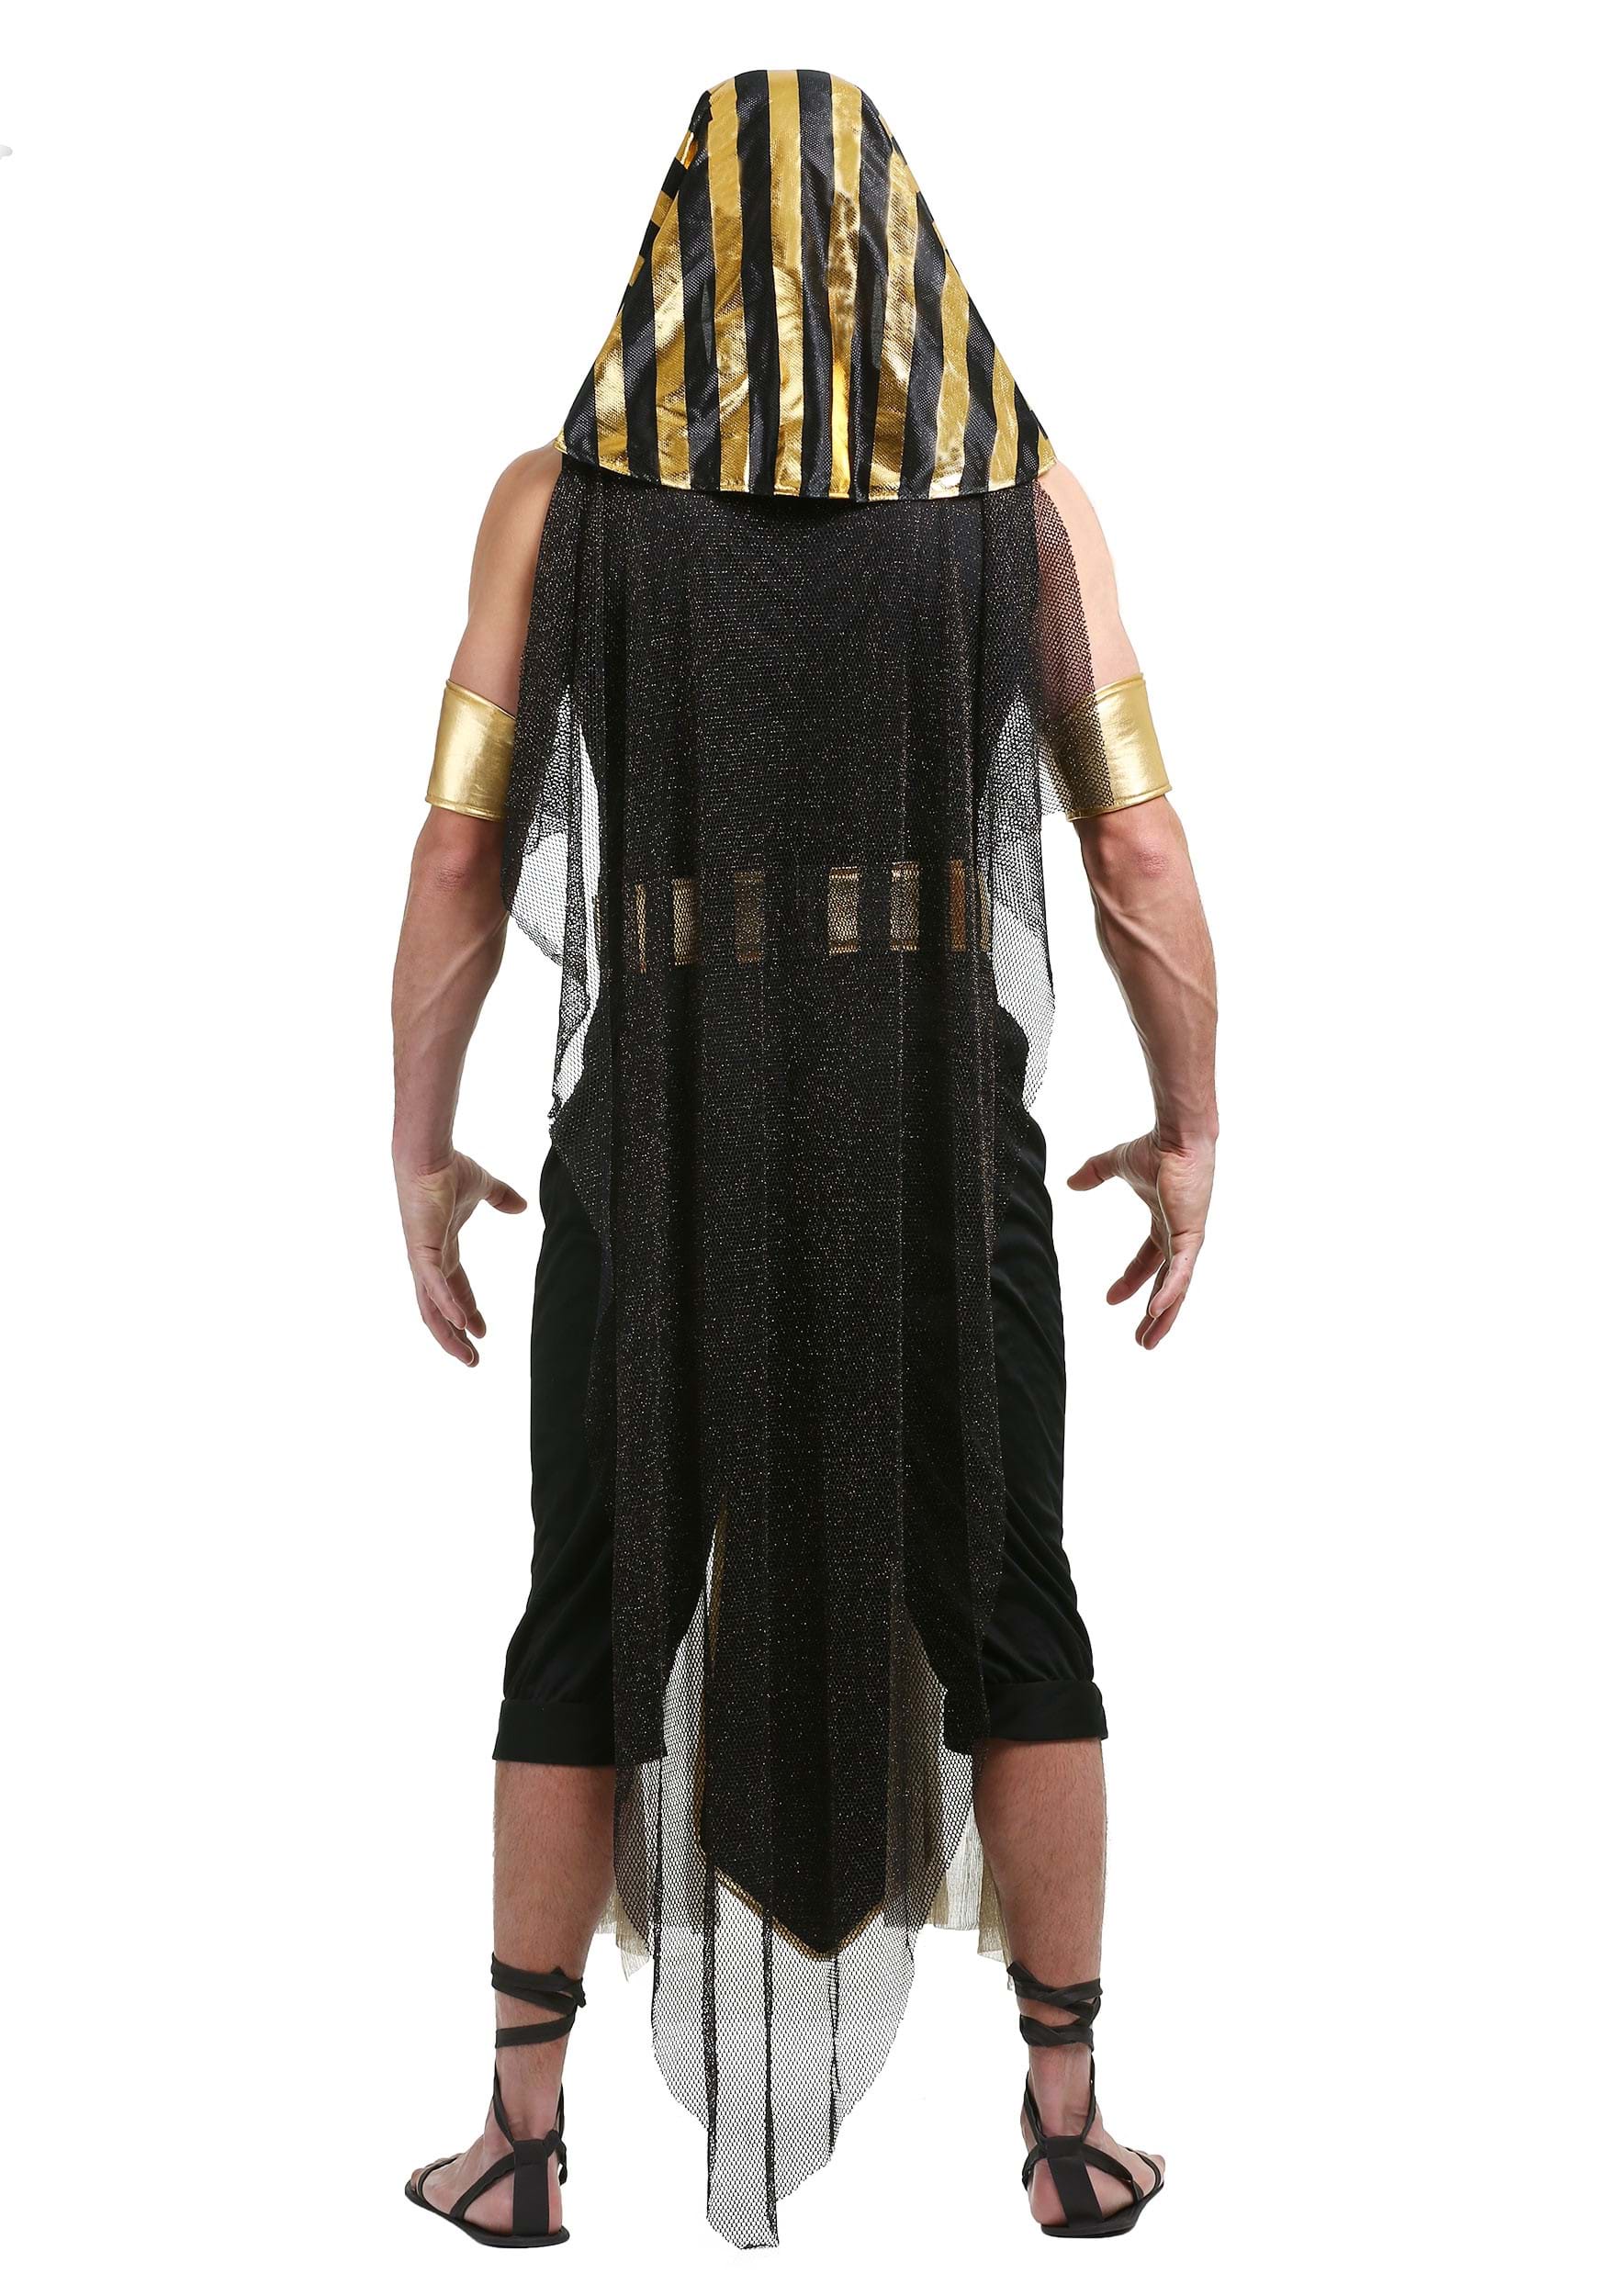 All Powerful Pharaoh Fancy Dress Costume , Men's Historical Fancy Dress Costumes